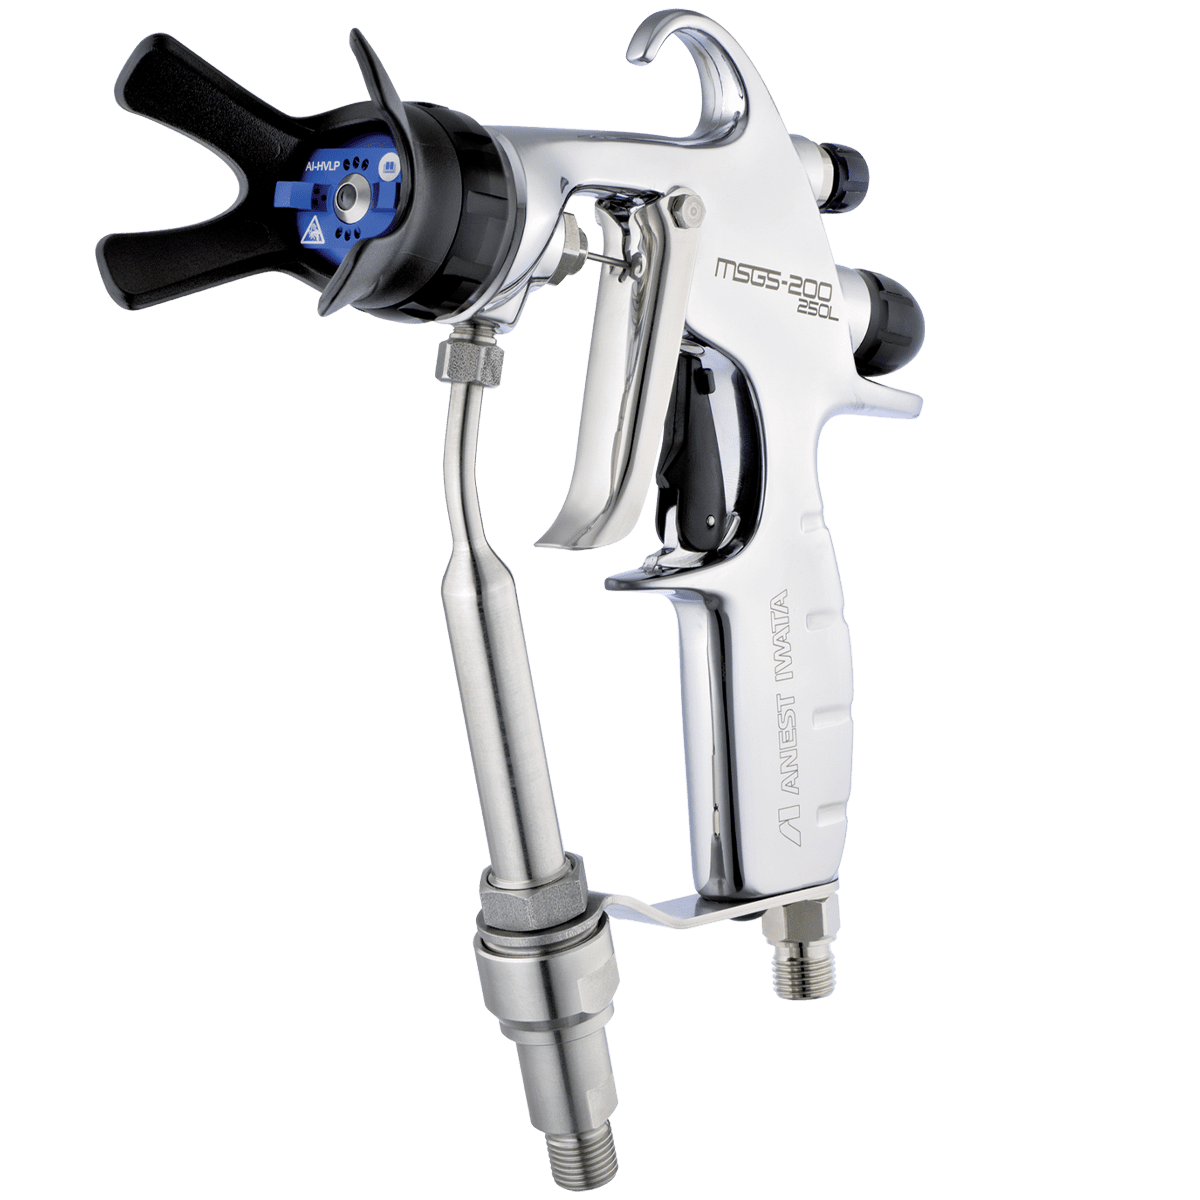 ANEST IWATA introduces new spray gun kits - Woodshop News